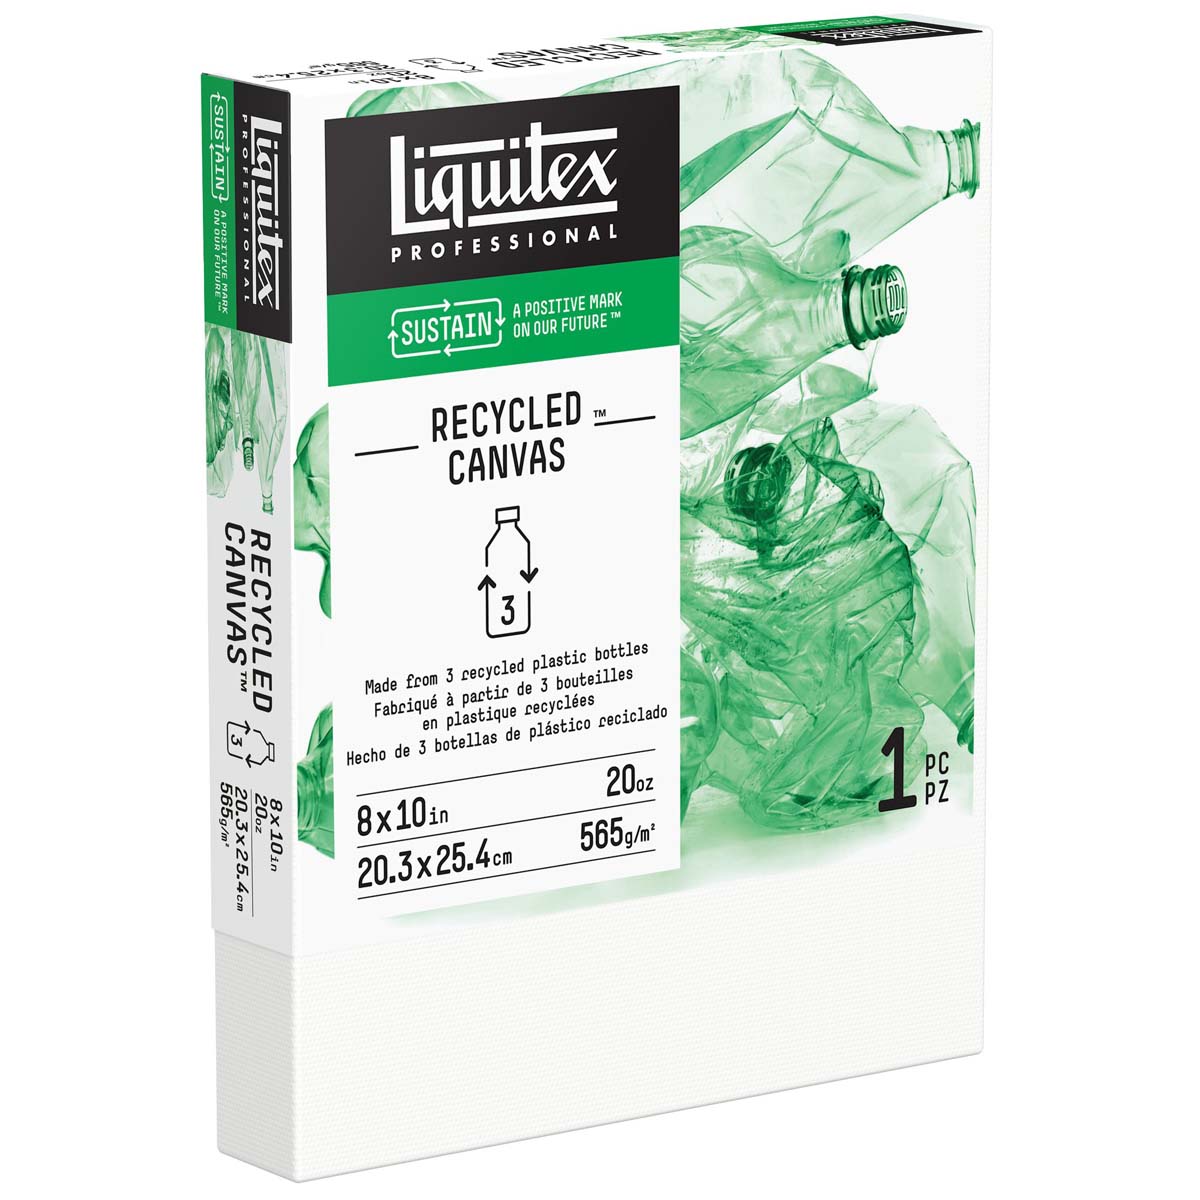 Liquitex Recycled Canvas - Deep Edge - 8x10 inches - 20x25cm